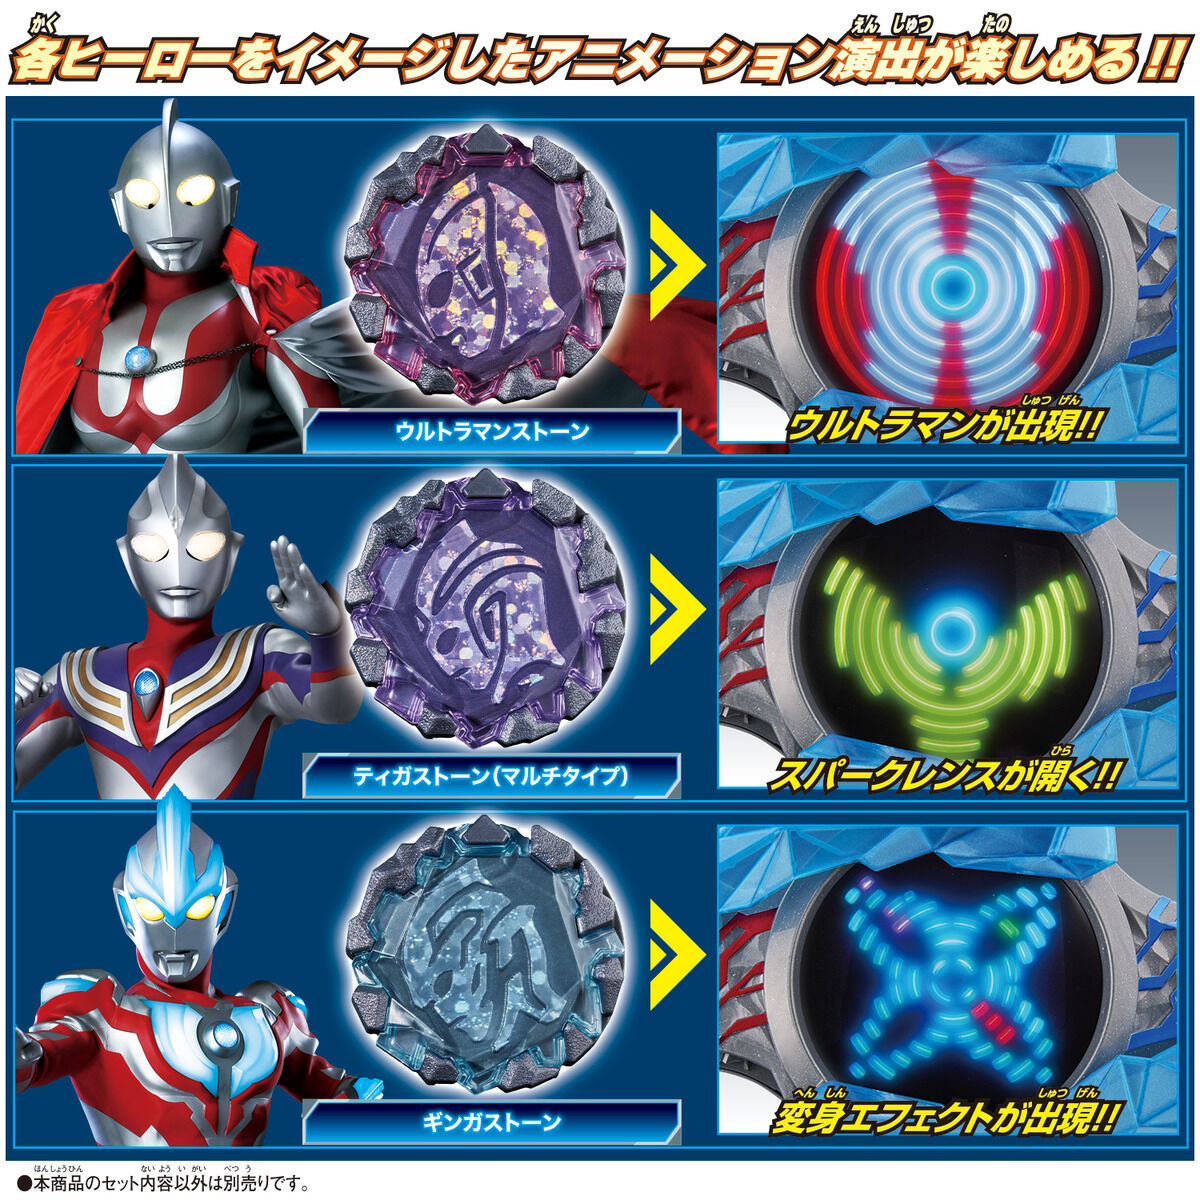 DX Blazar Stone 01 - Glorious Ultraman Set